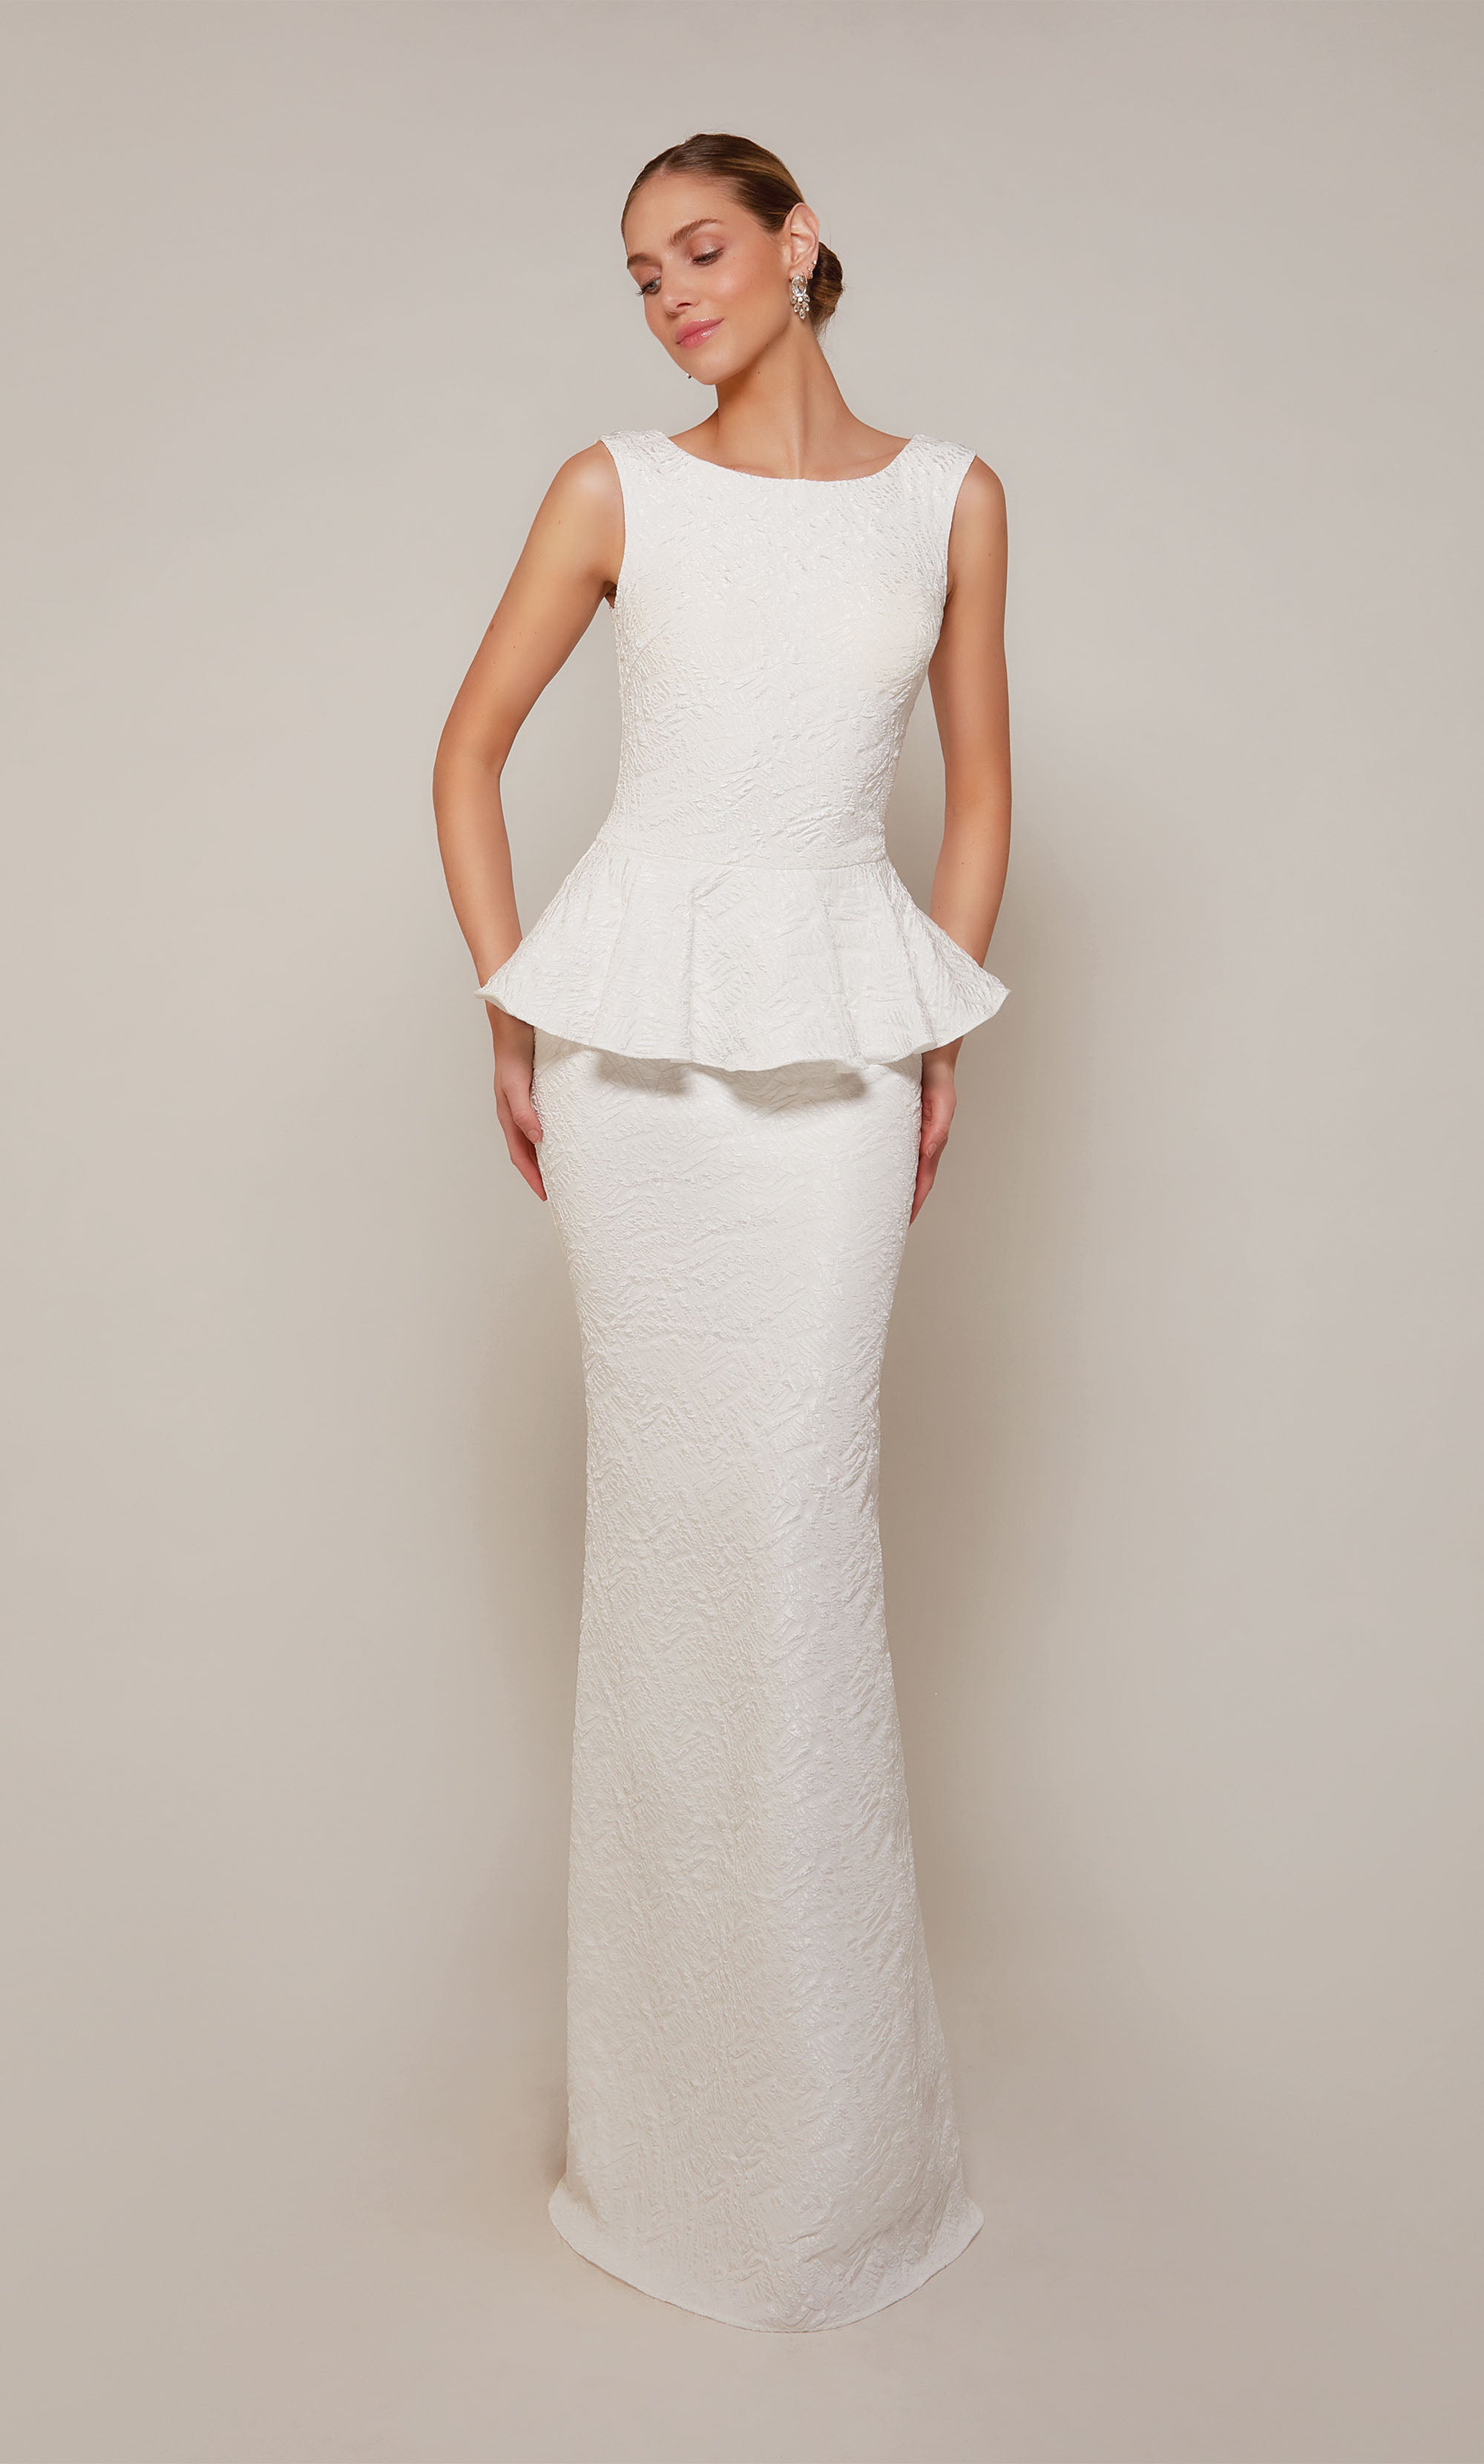 White Peplum Dress Picture Collection | DressedUpGirl.com